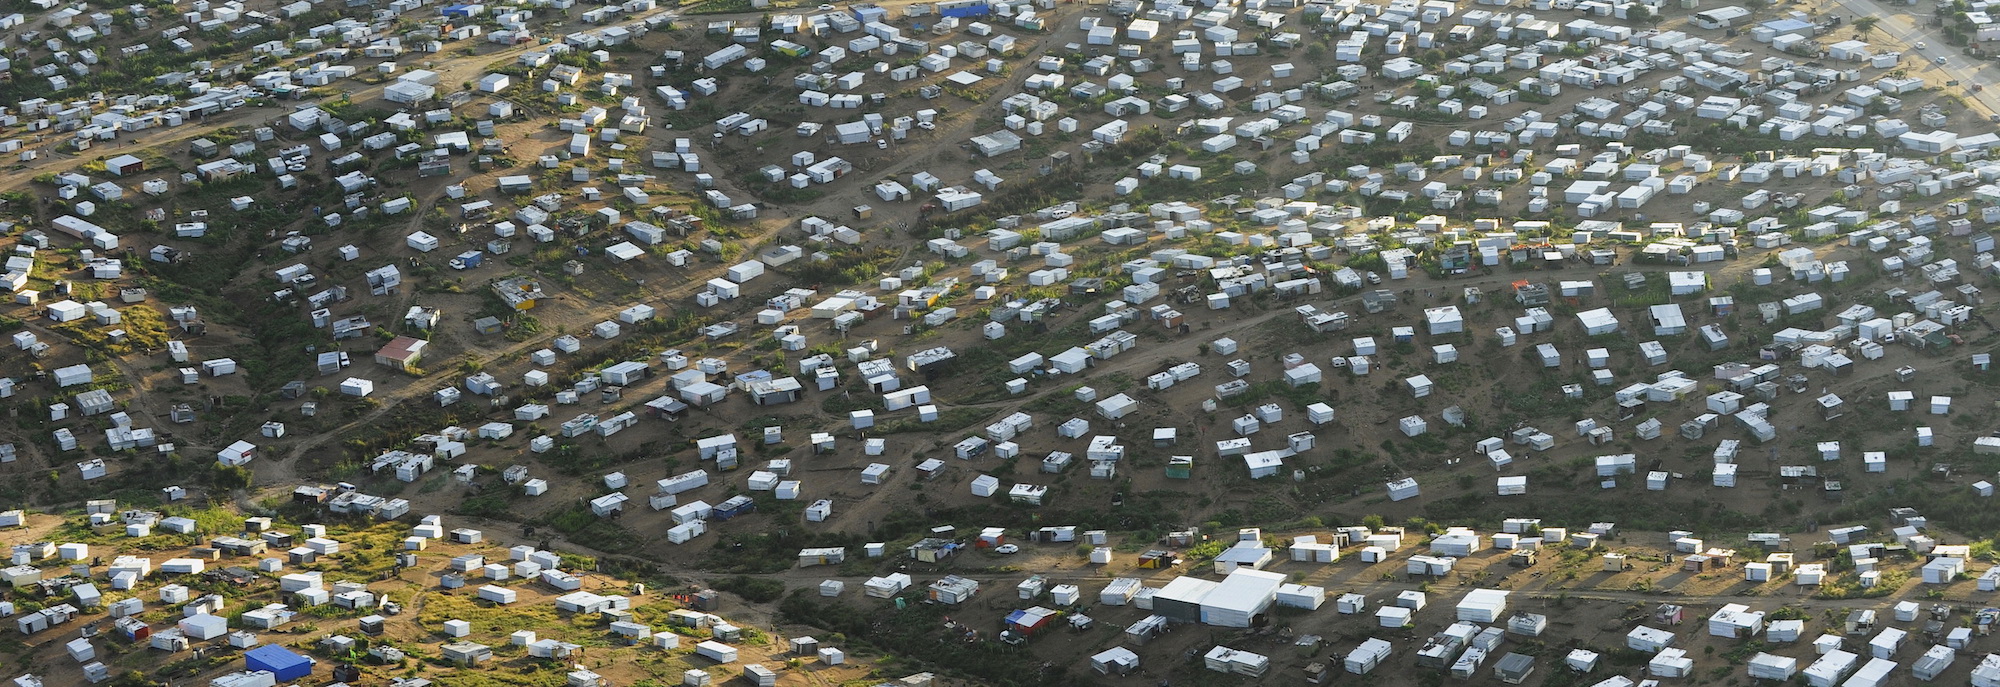 Overhead view of shack settlement near Windhoek.